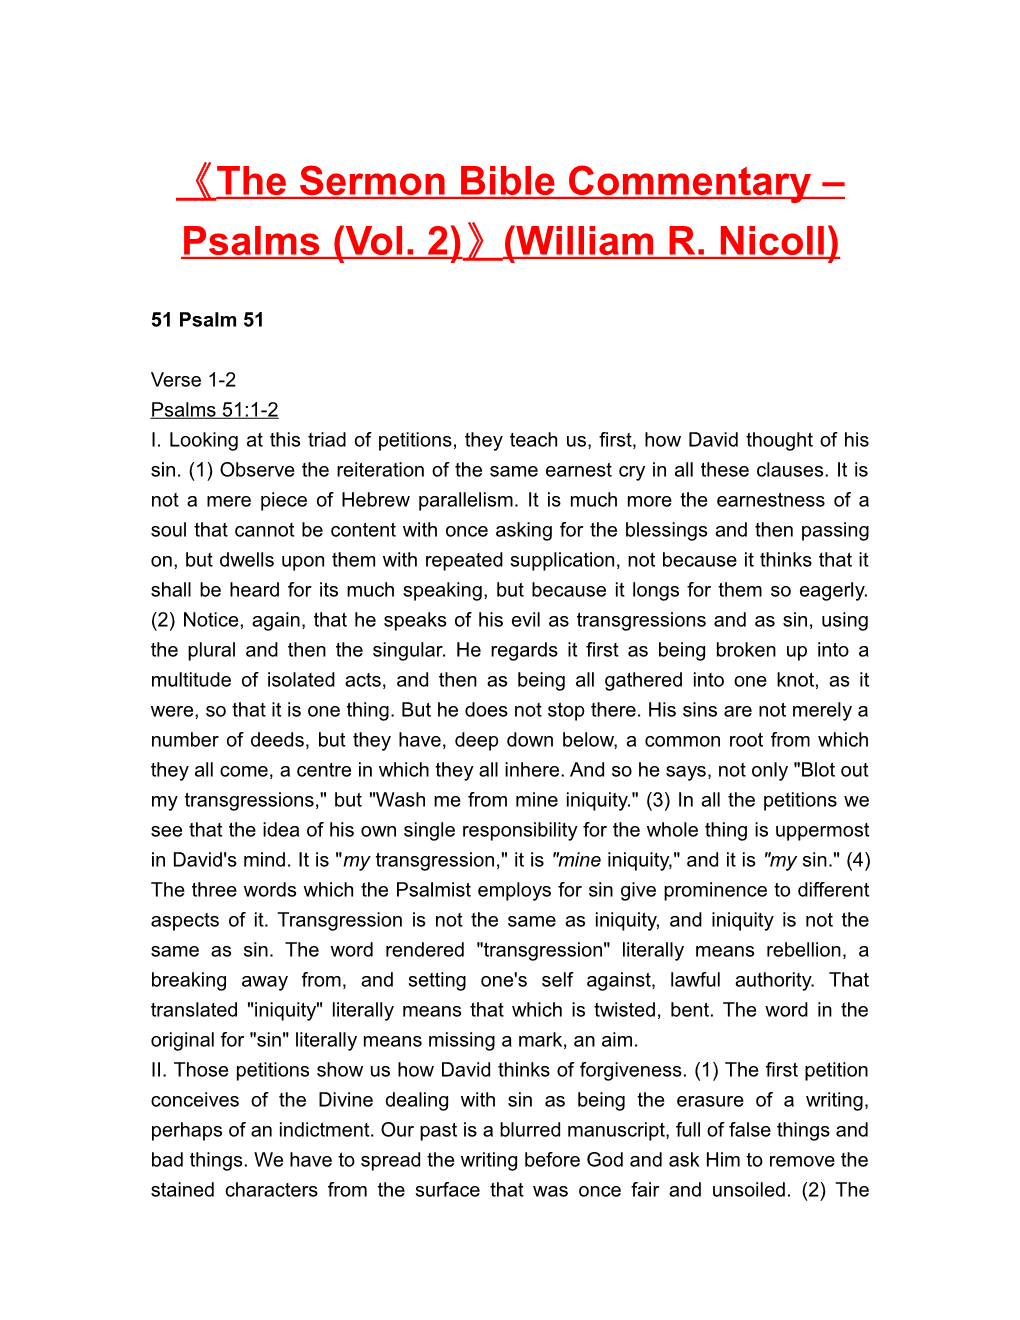 The Sermon Bible Commentary Psalms (Vol. 2) (William R. Nicoll)